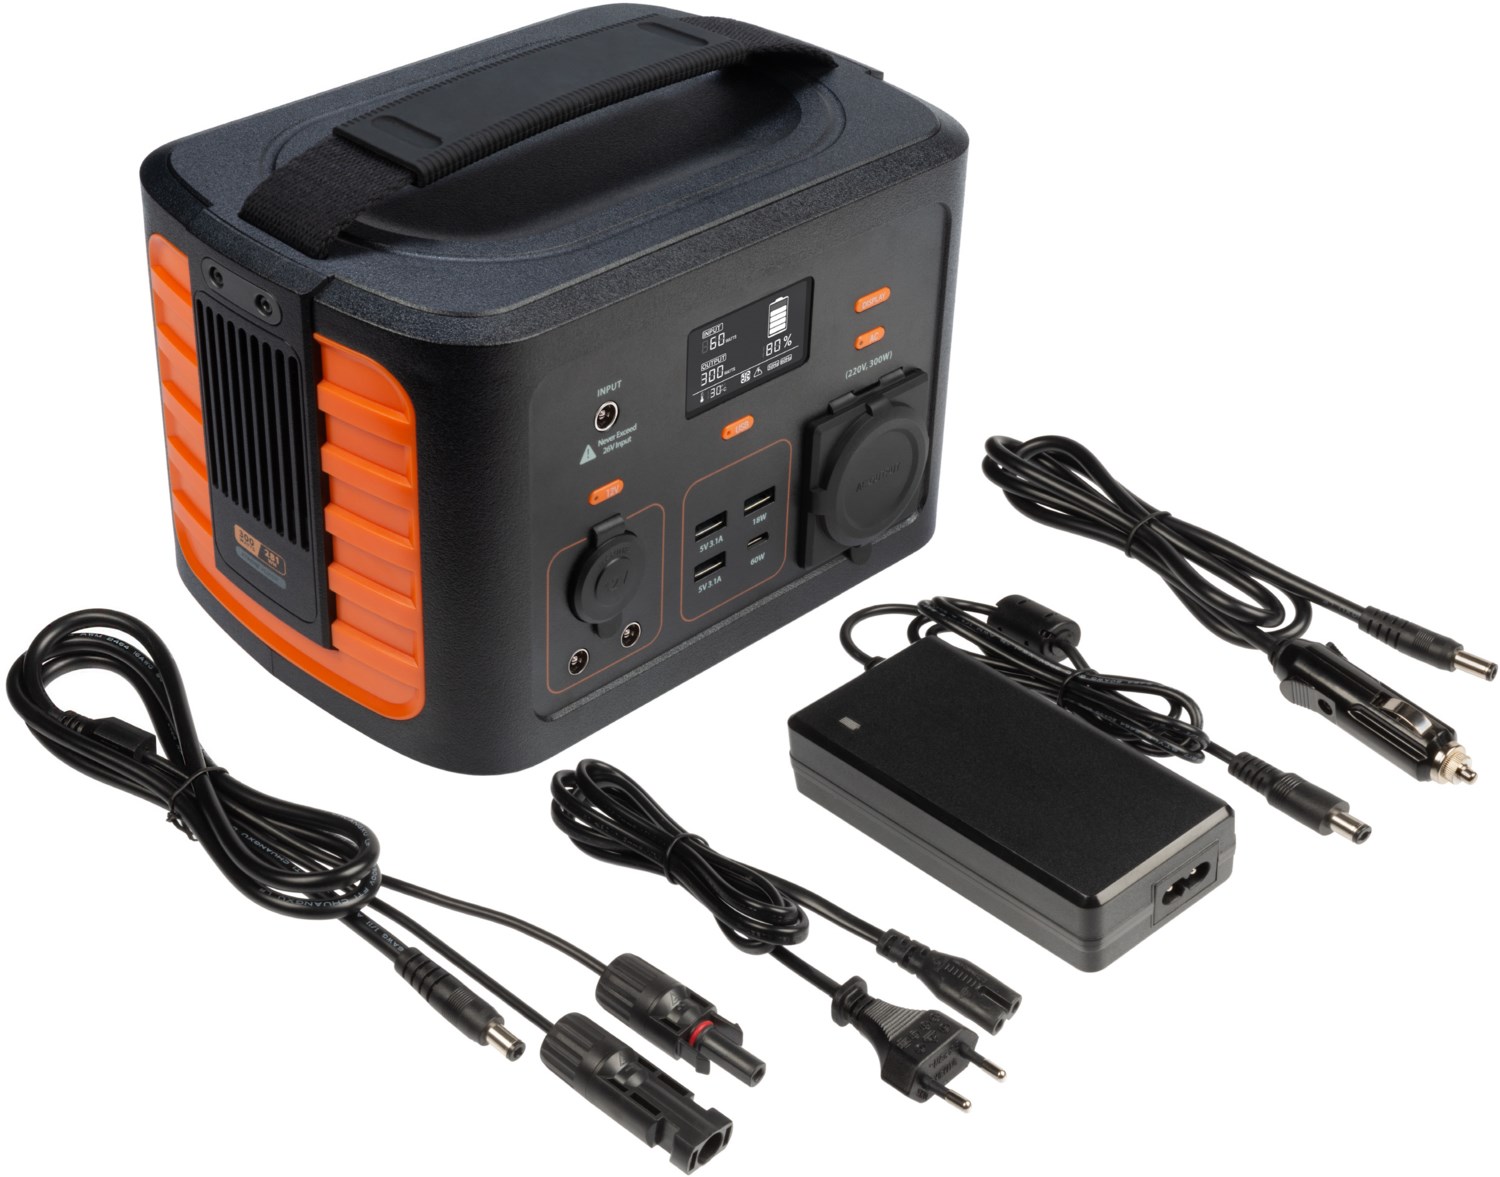 Portable Power Station 300 schwarz/orange